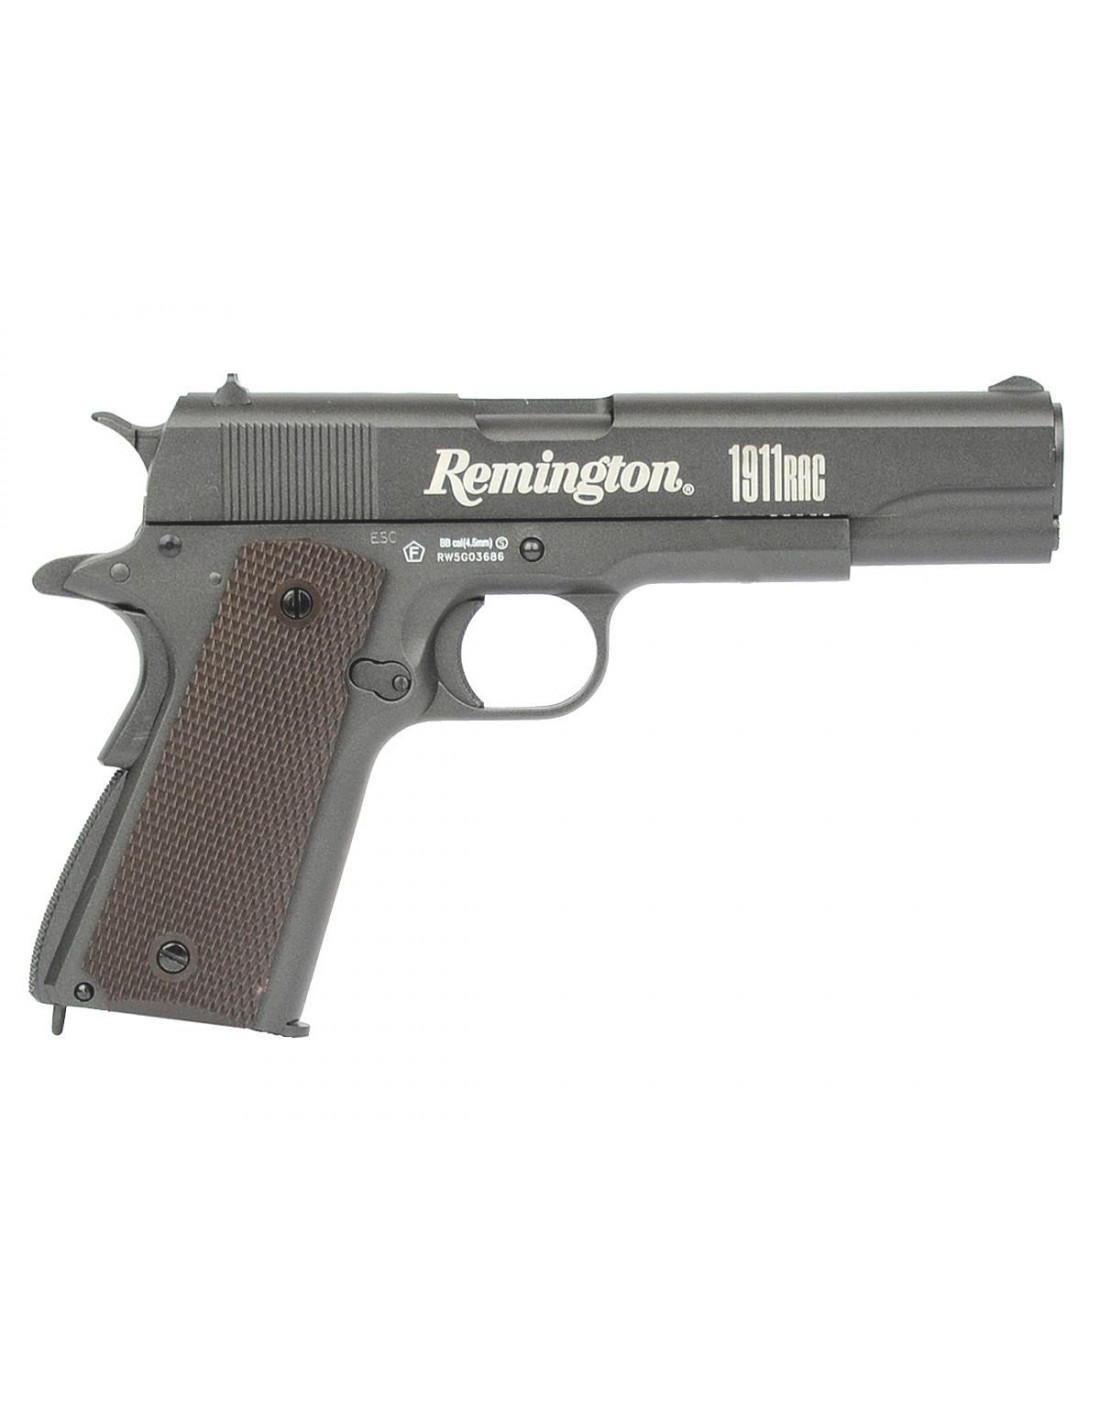 https://www.airsoftgunbcm.com/7182-thickbox_default/remington-1911-rak-pistol-blowback-full-metal-45mm-.jpg